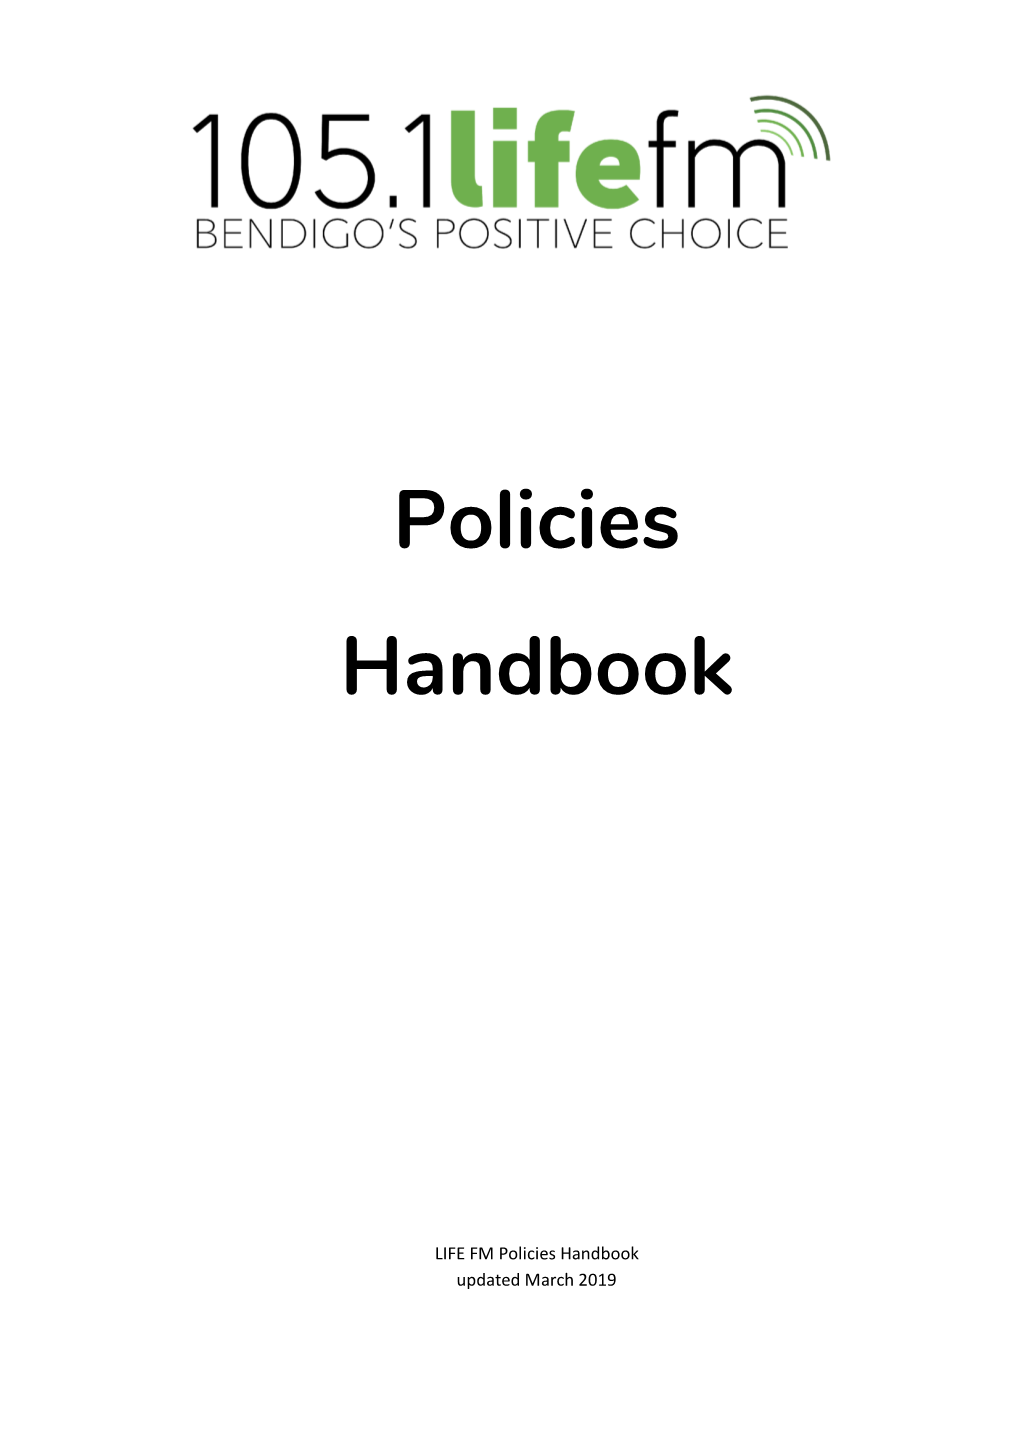 Policies Handbook